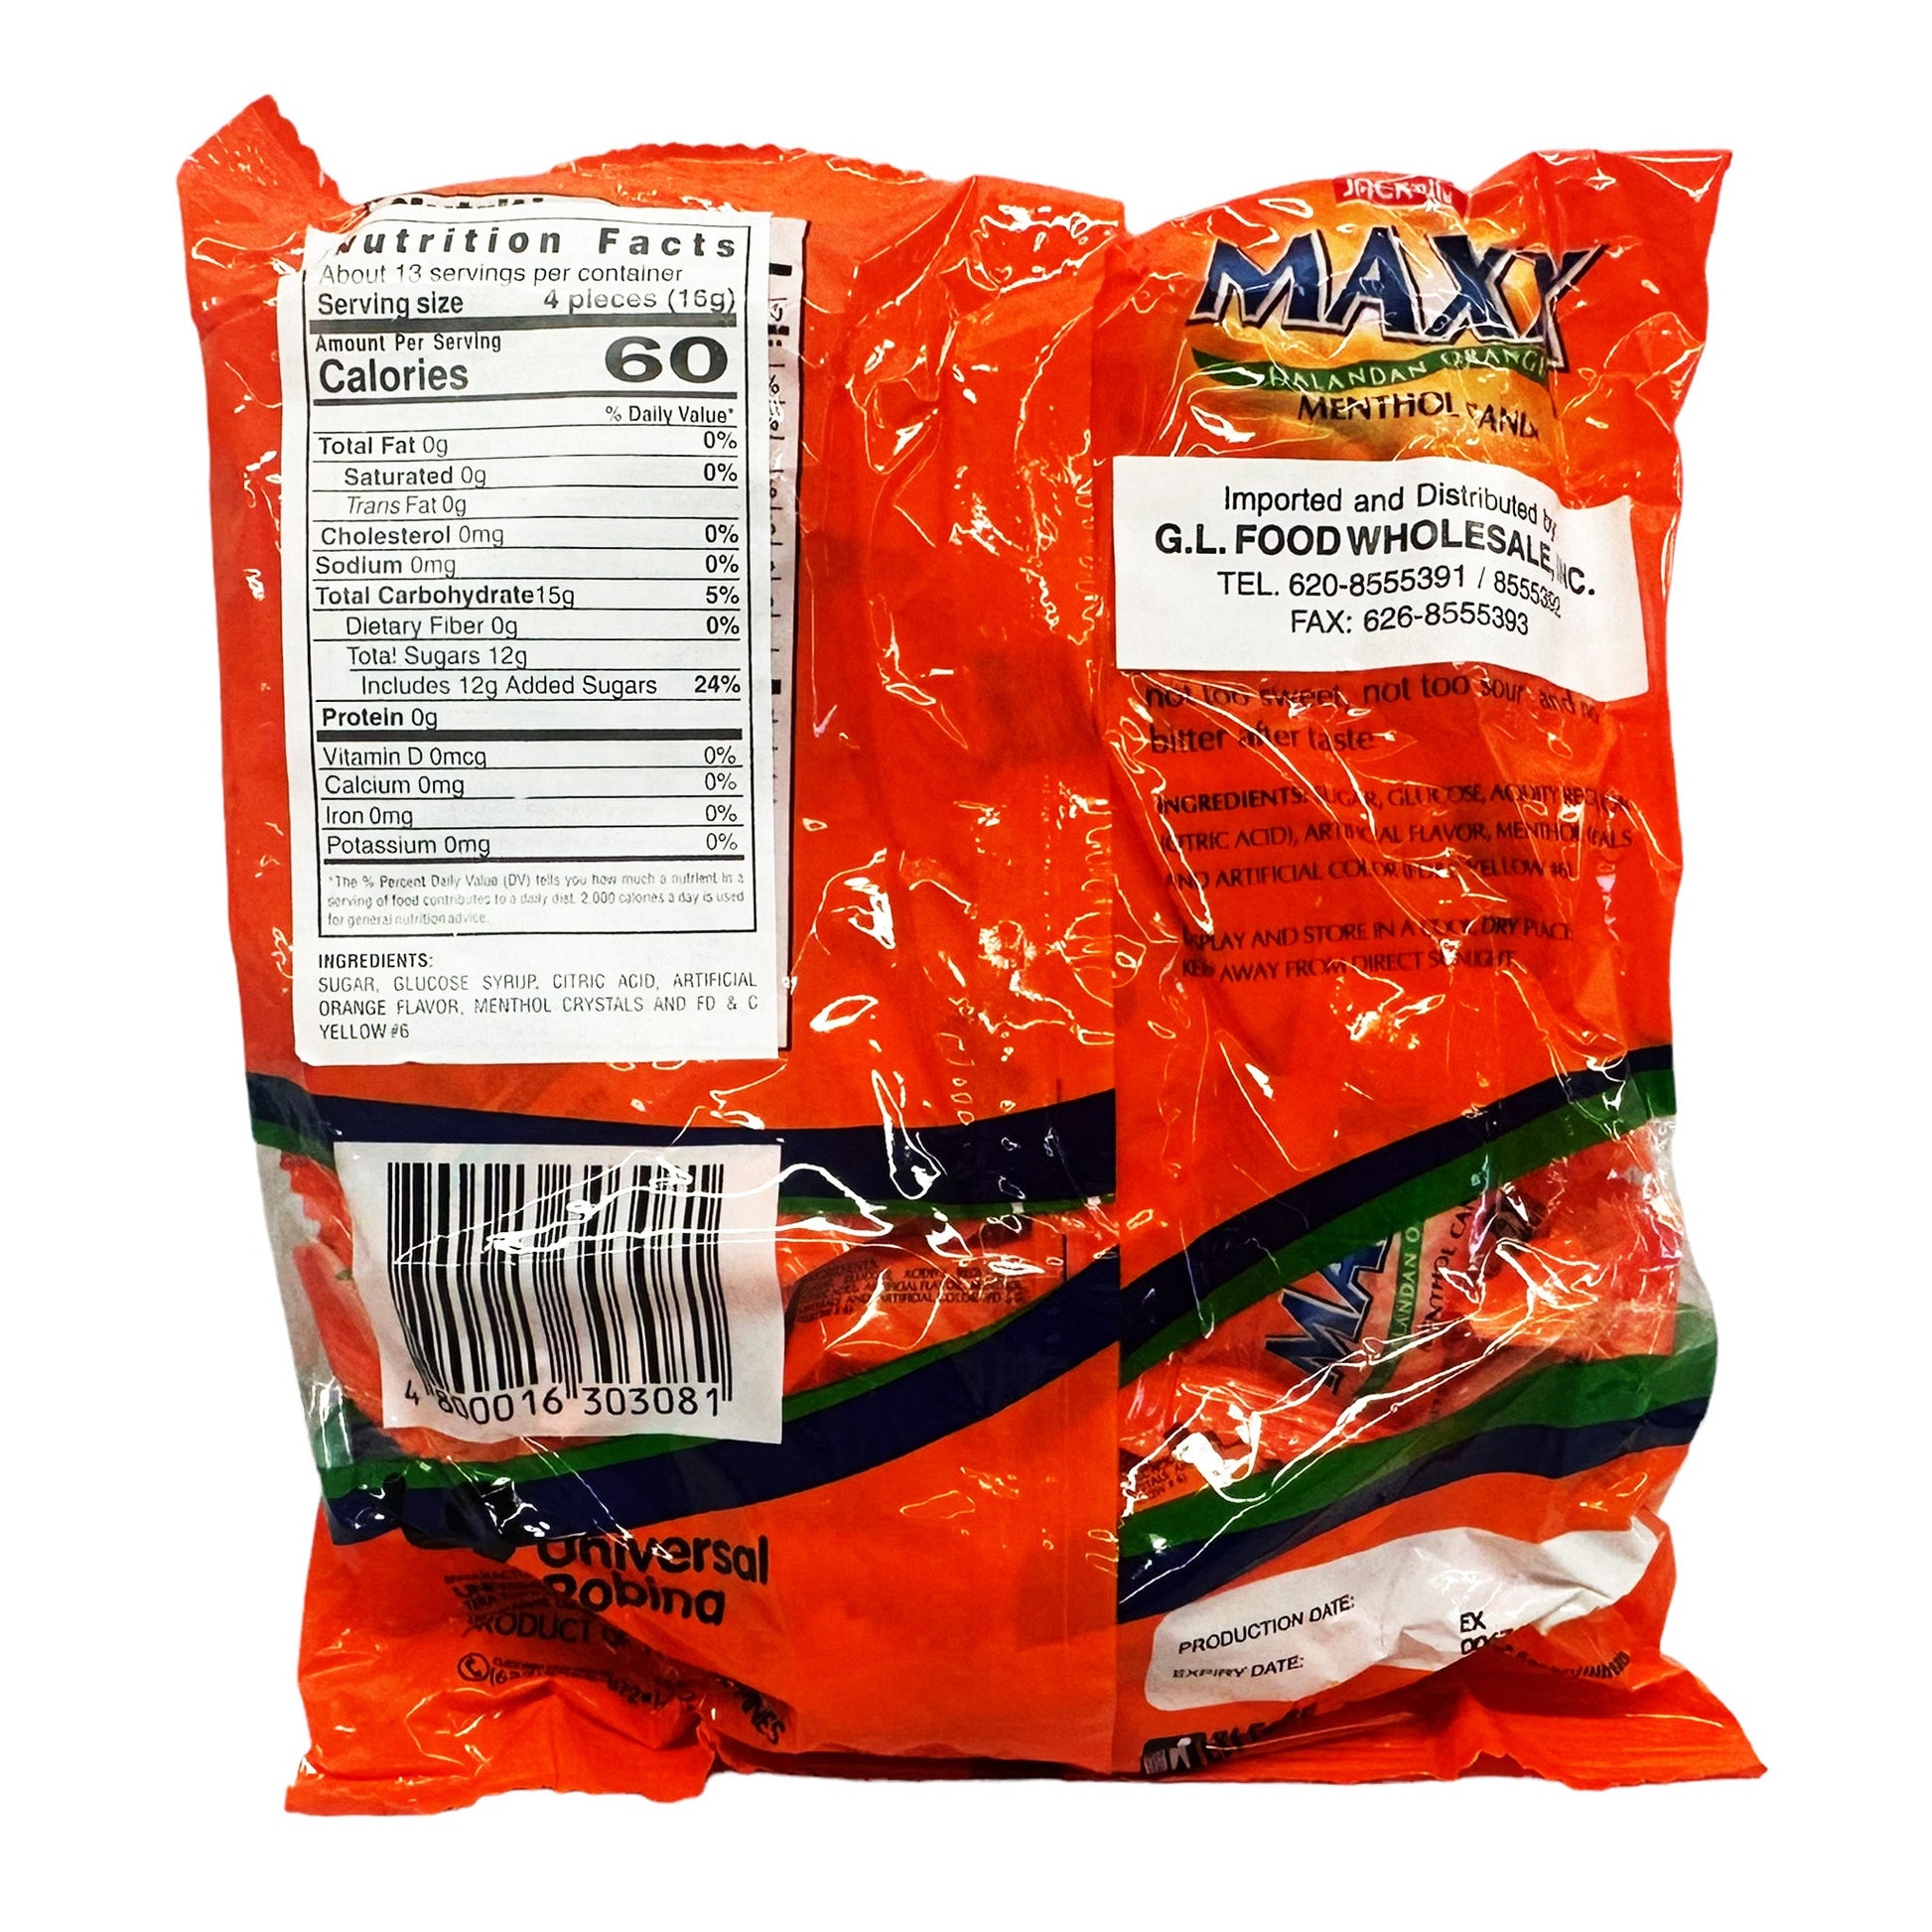 Back graphic image of Jack n' Jill Maxx Menthol Candy Orange - Dalandan 7.94oz